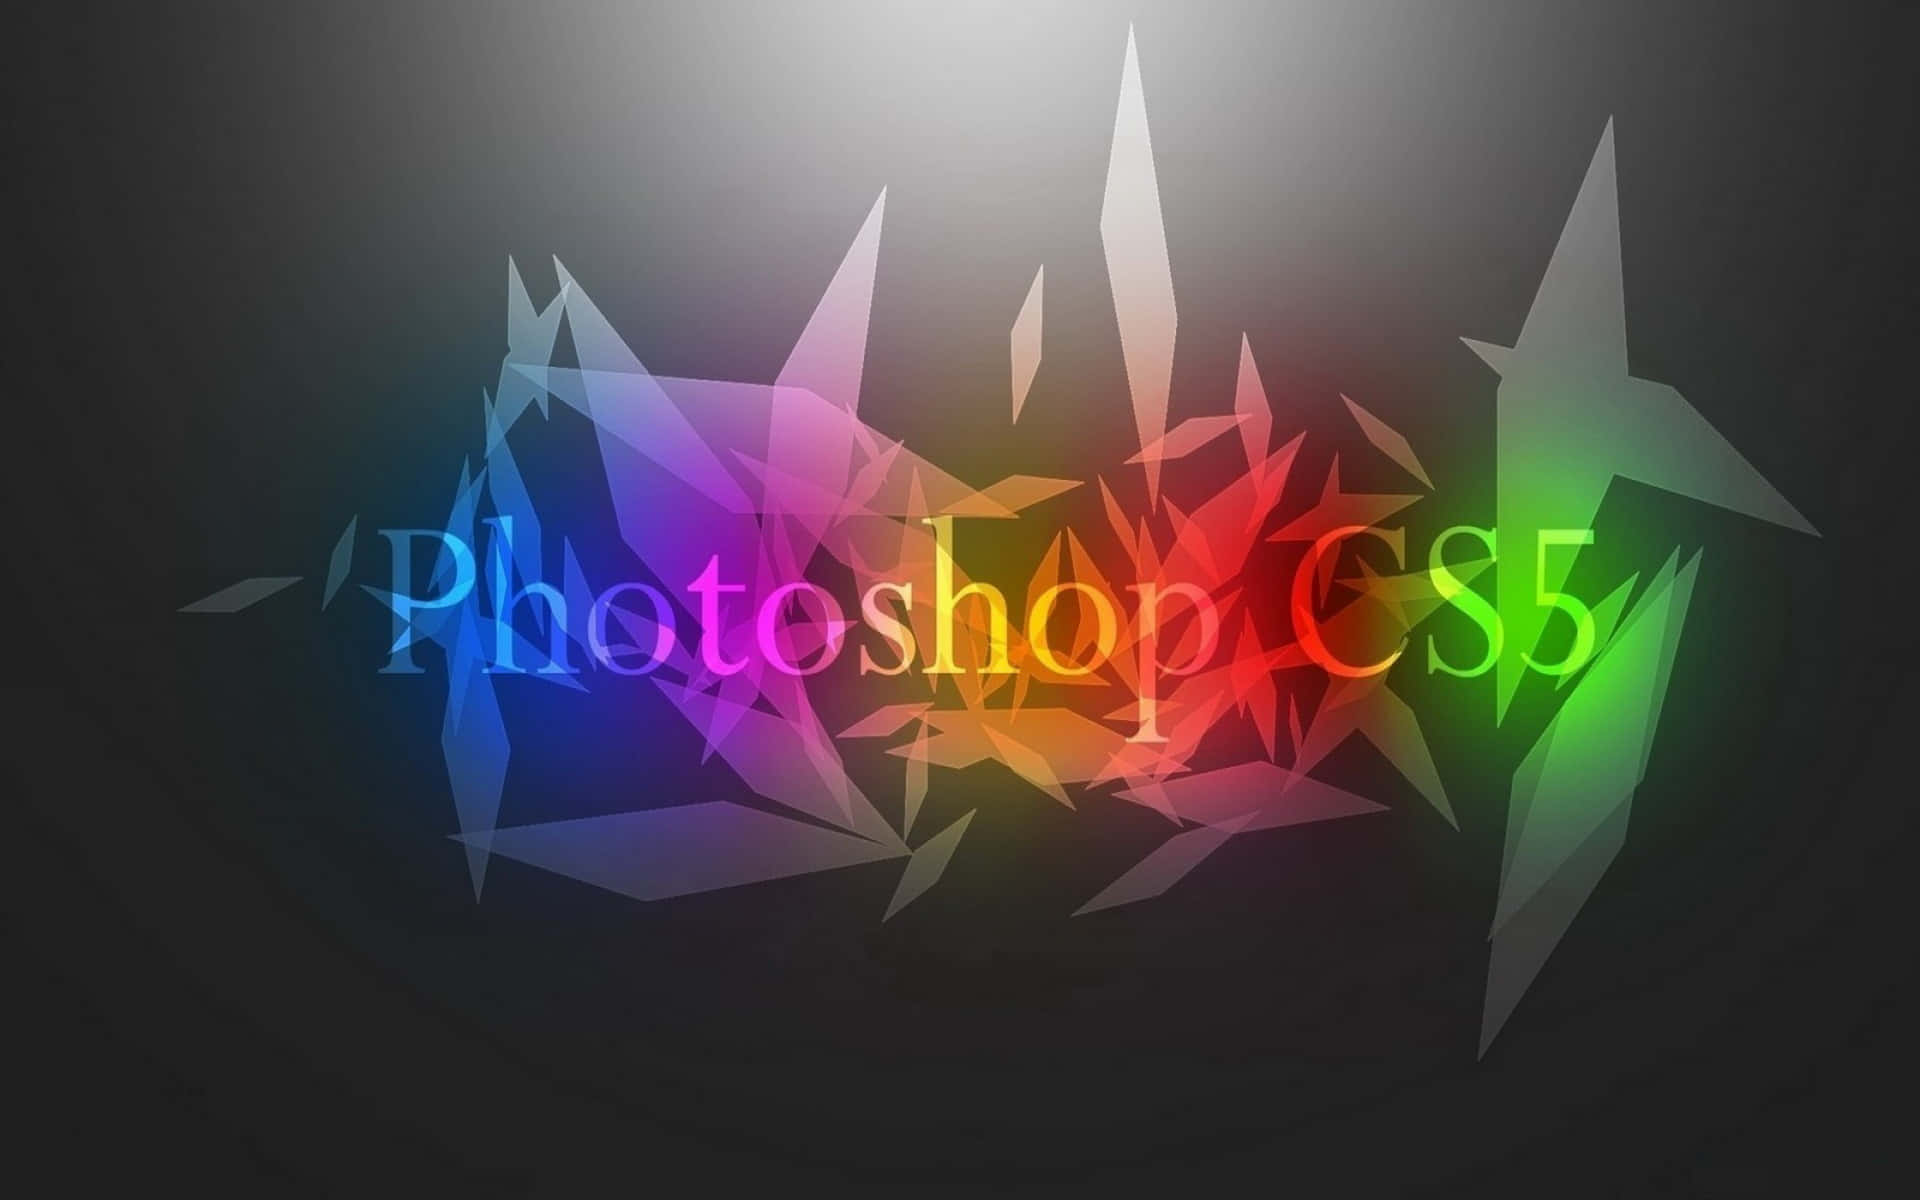 Logomulticolor De Photoshop Cs5. Fondo de pantalla